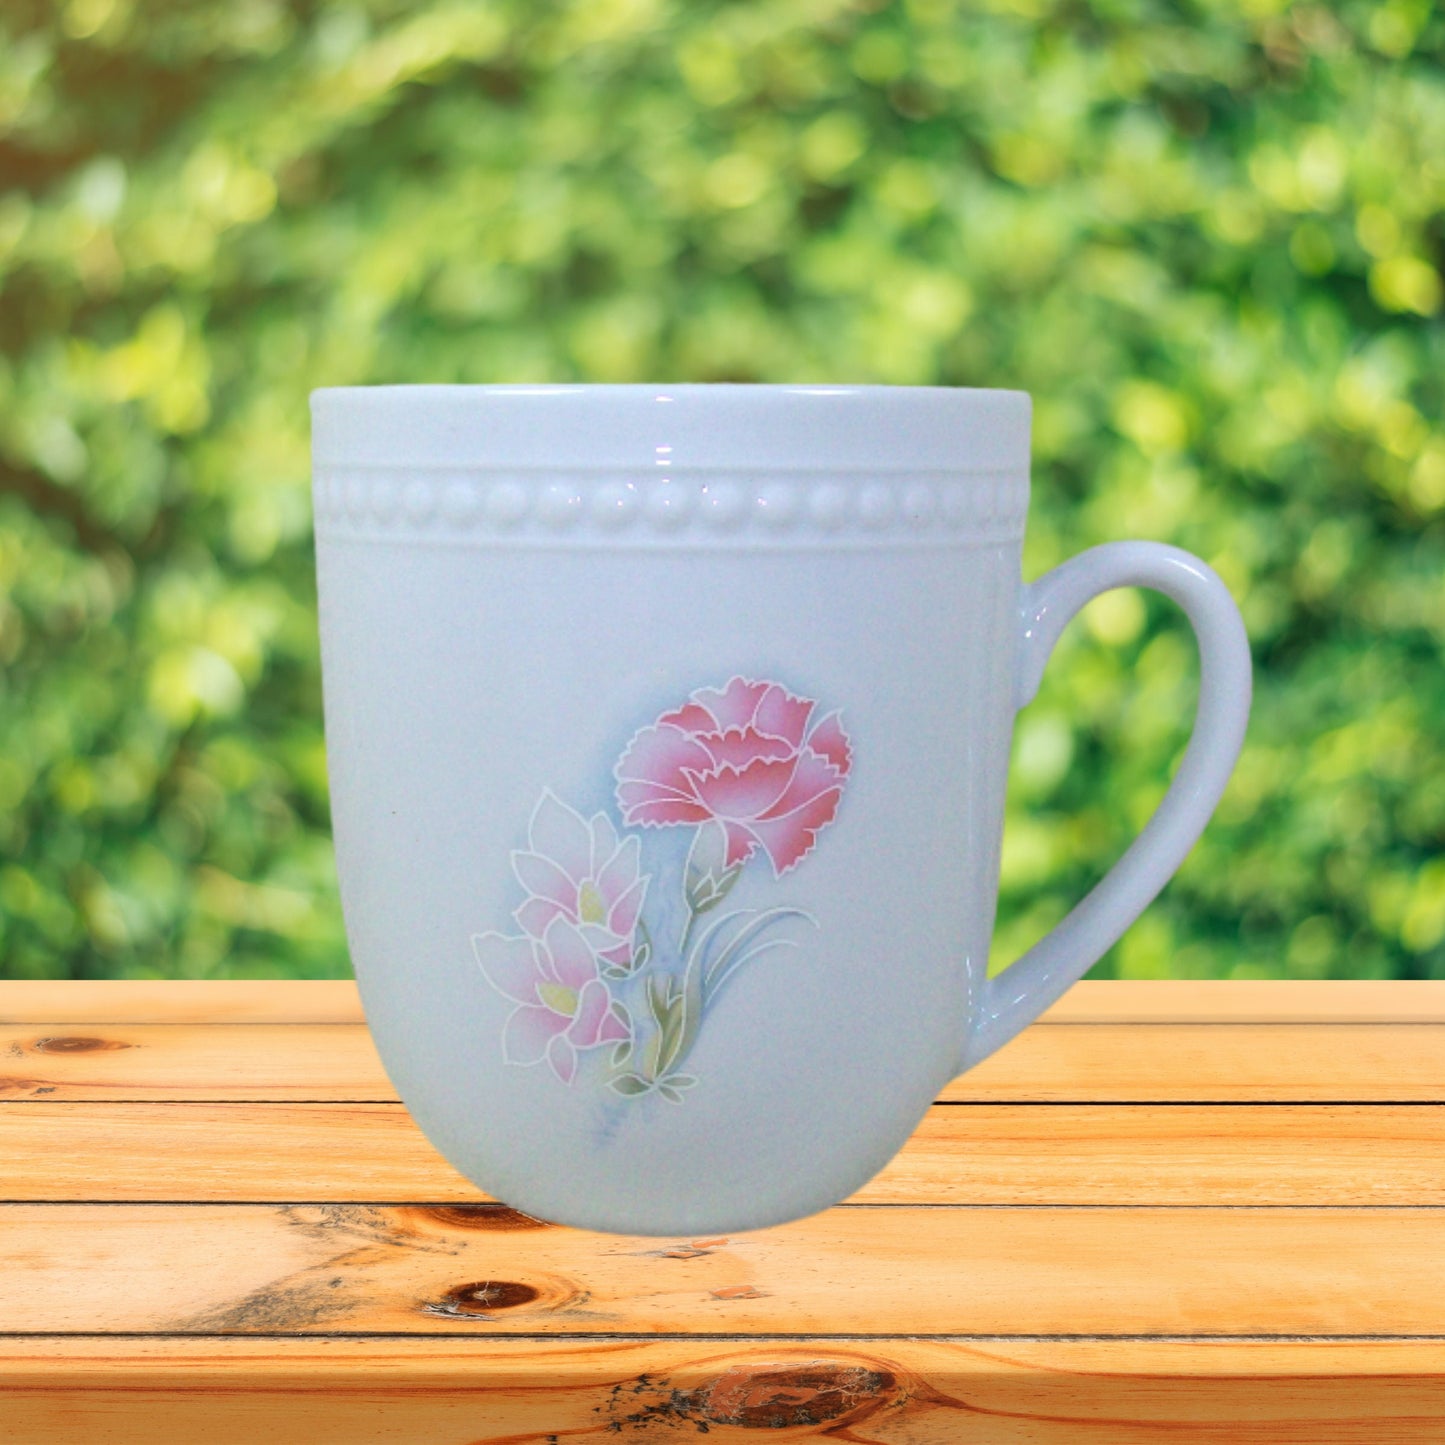 Flower Ceramic Coffee Mug / Coffee Cup With Pink Flower / Tea Mug / Beverage Container / Floral Decor / Inspirational Mug